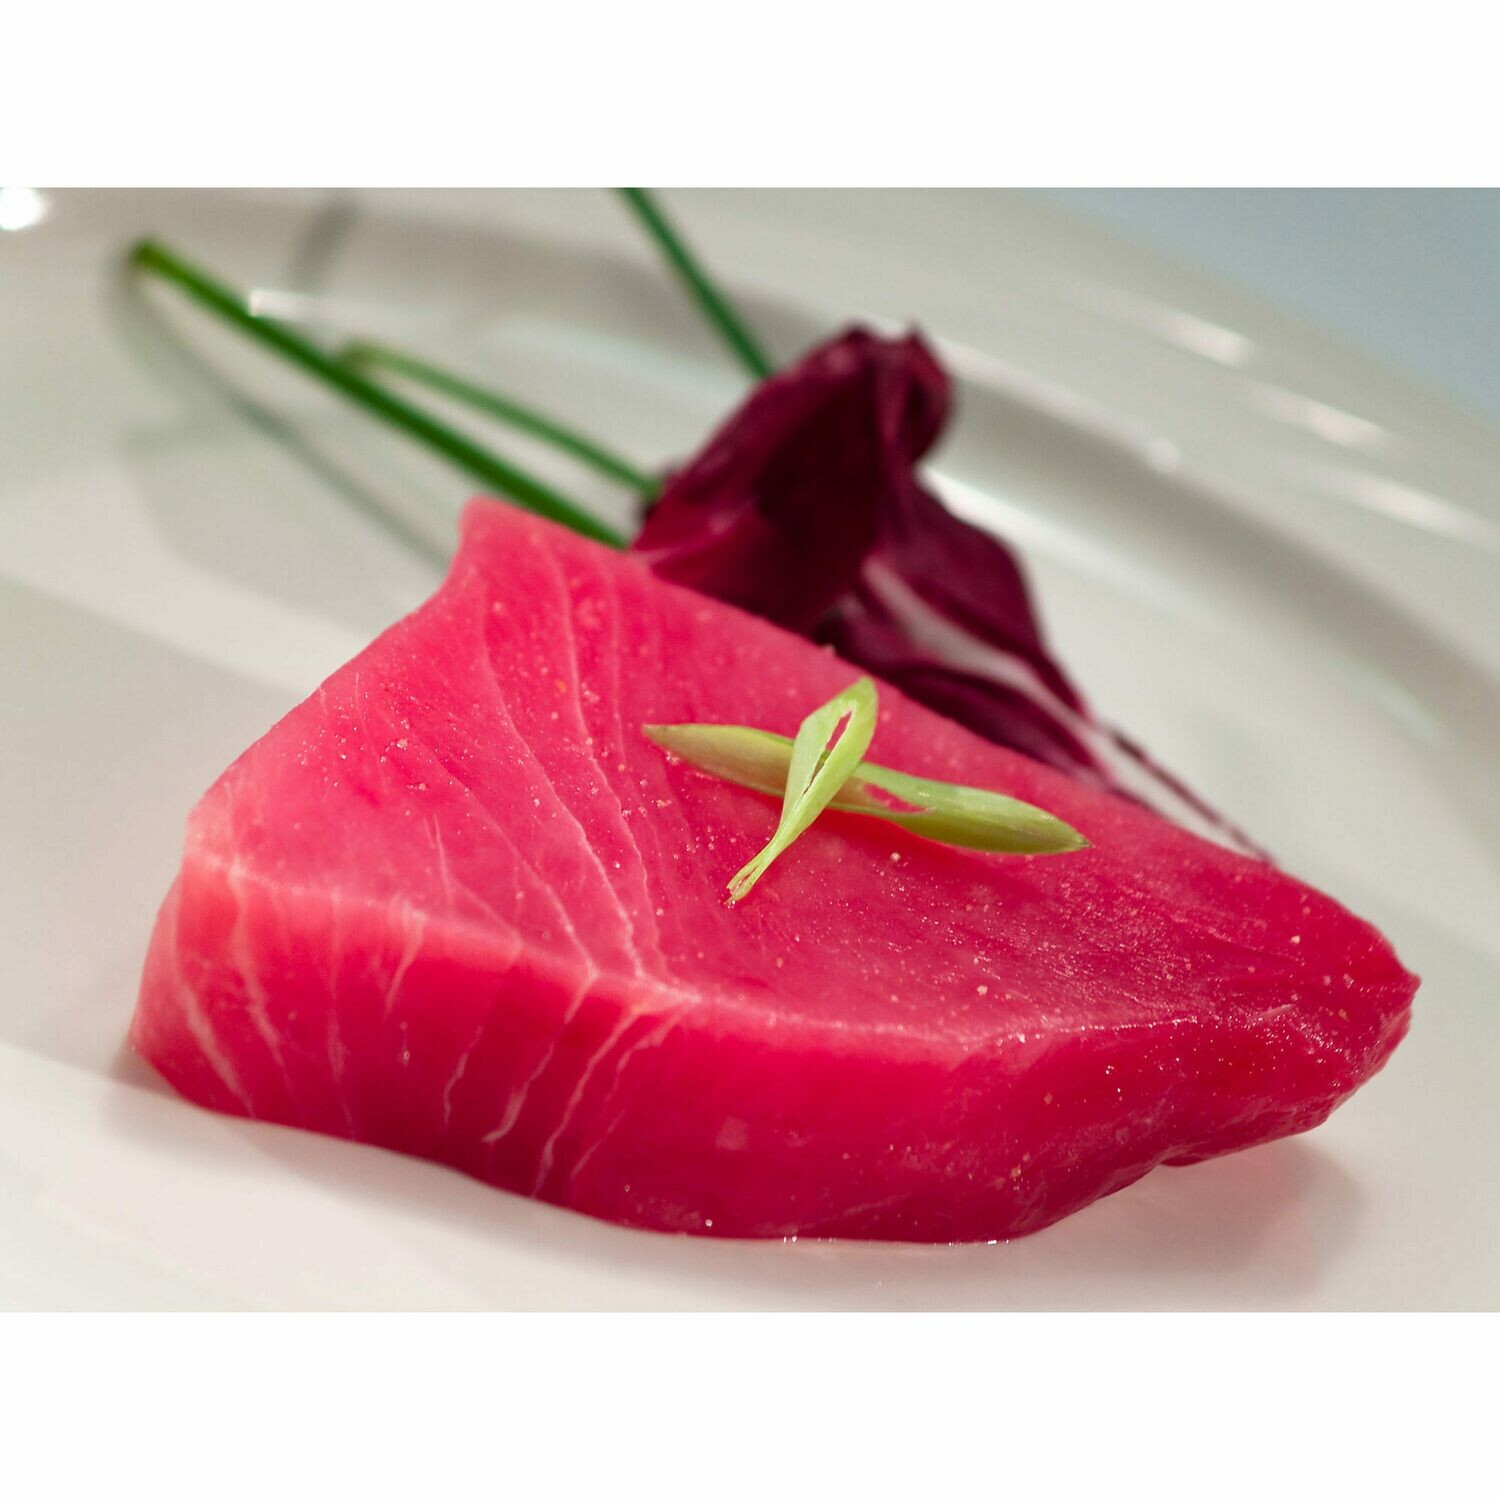 8oz Yellowfin Tuna Steaks Wild Caught